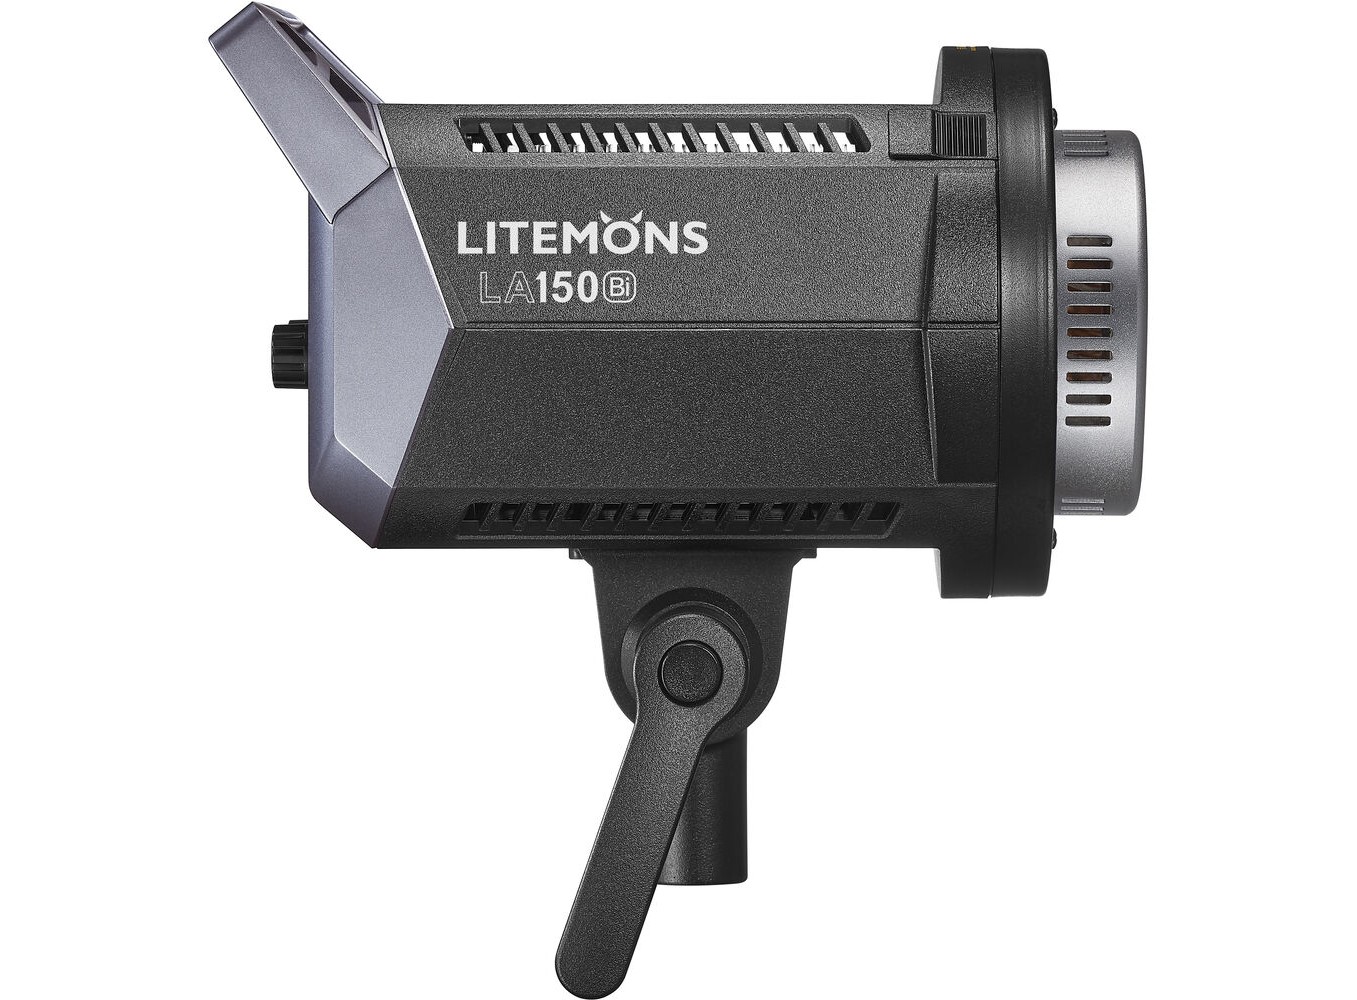 Đèn LED Godox Litemons LA150Bi